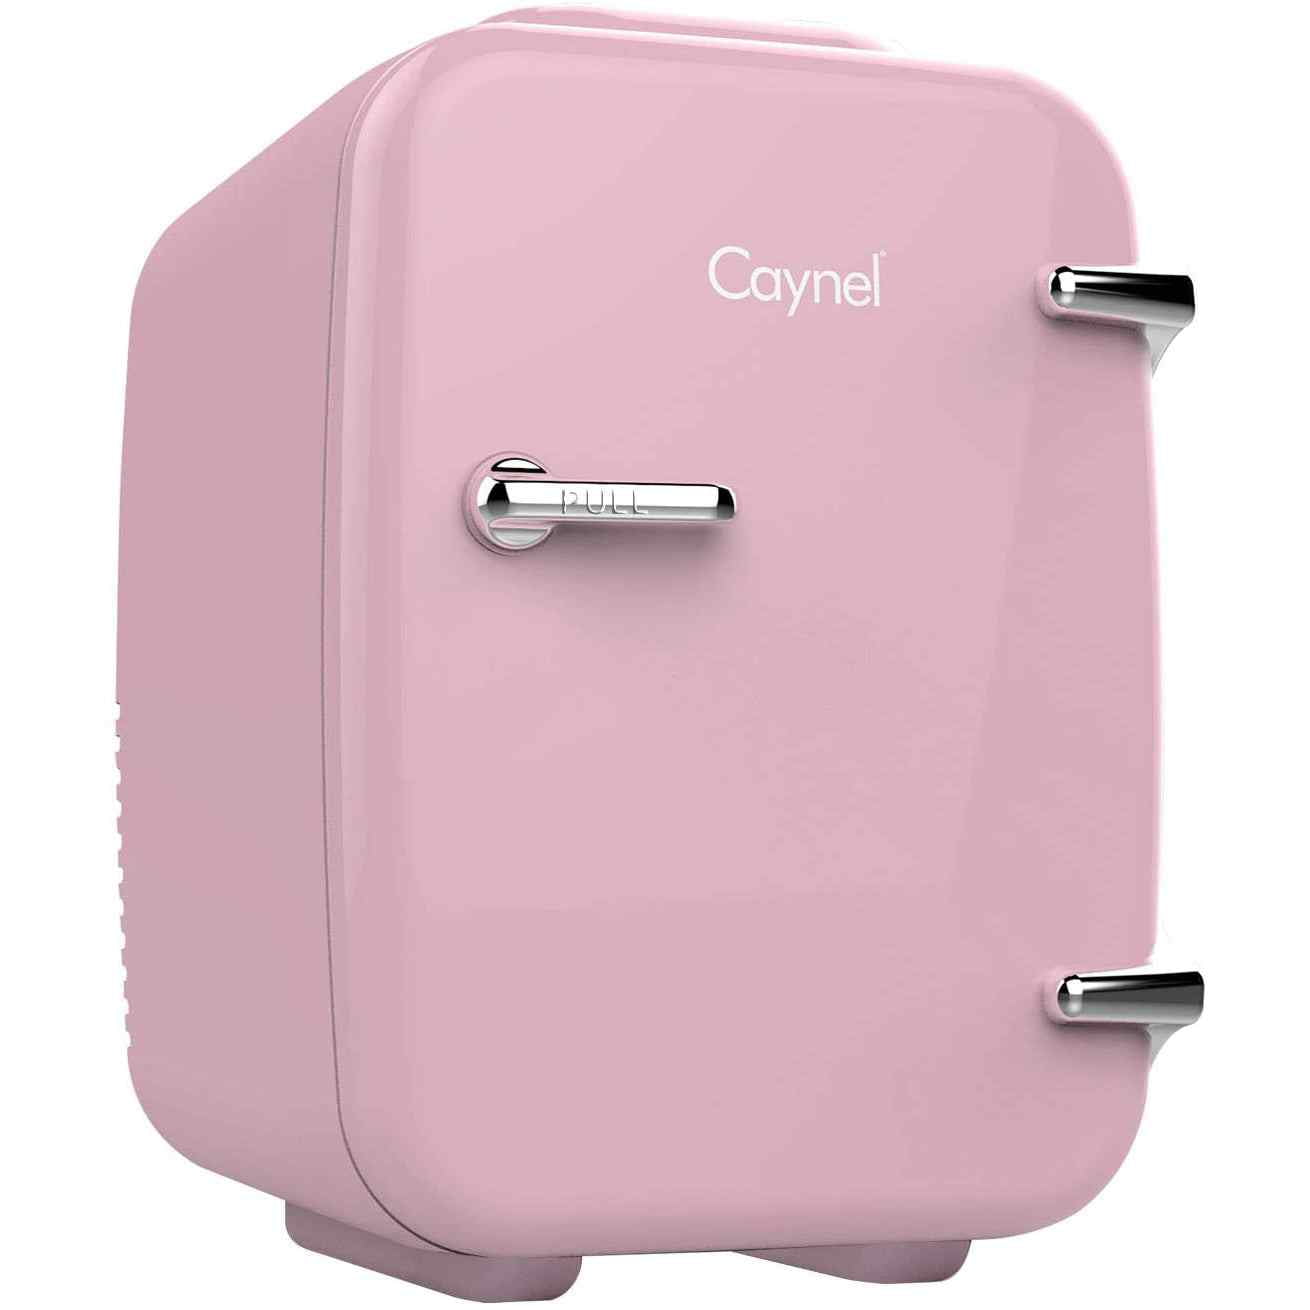 Caynel Portable Thermoelectric 4 Liter Mini Fridge, Pink - Walmart.com